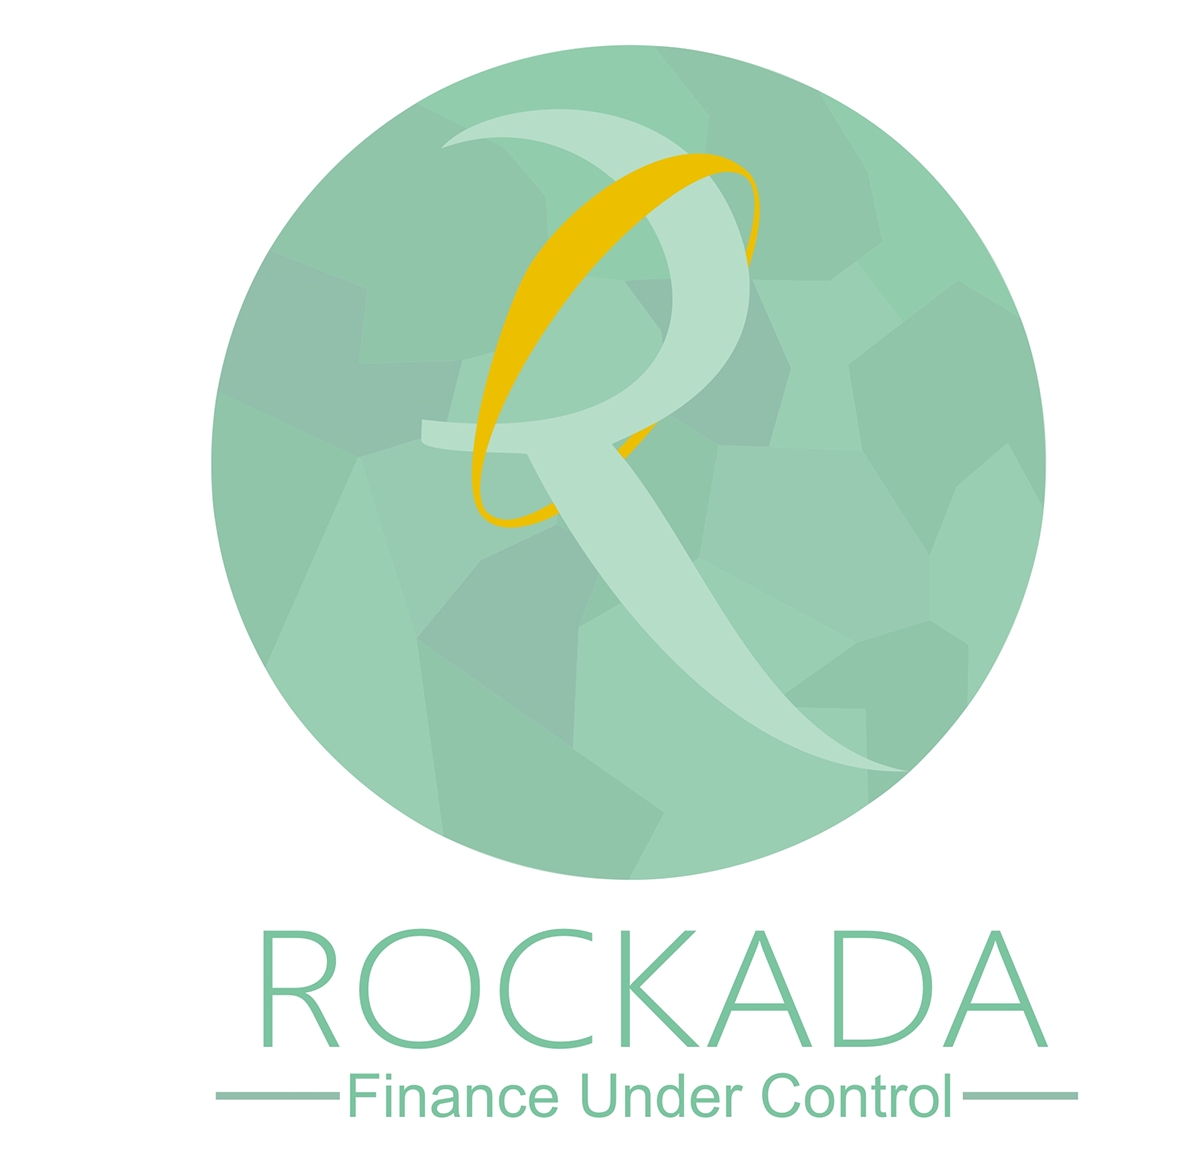 rockada finance application R logo green Shades